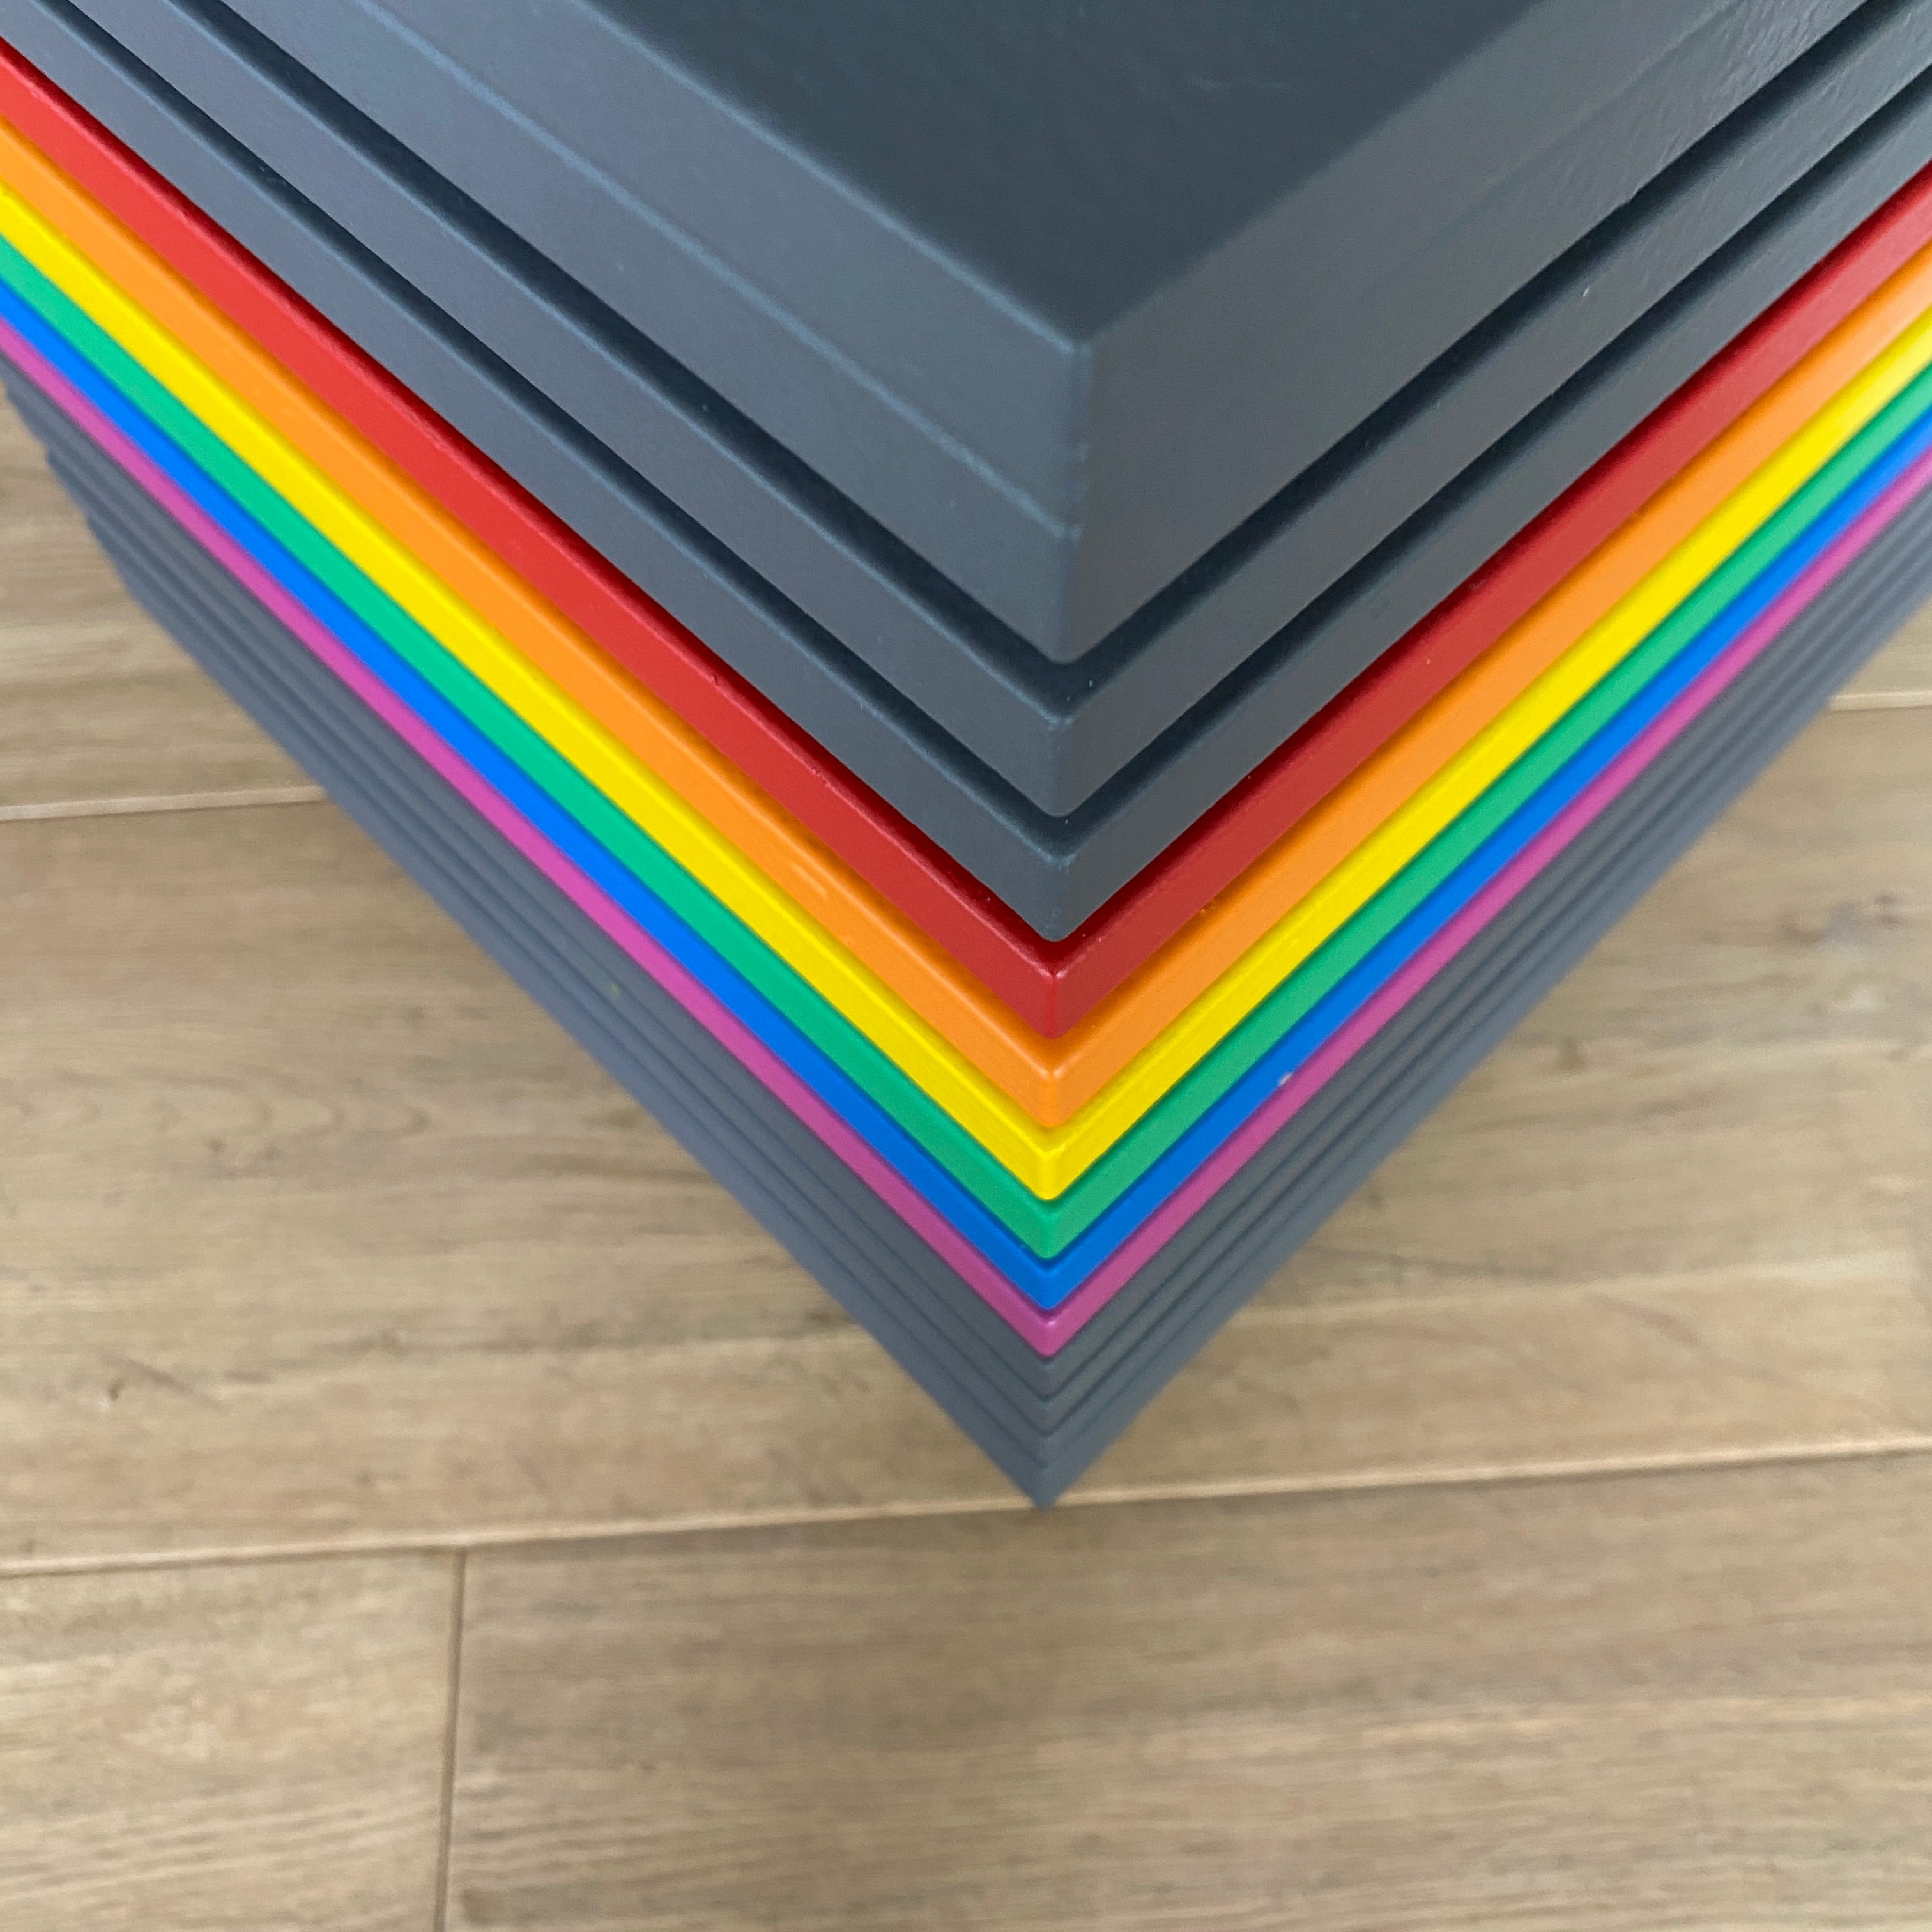 Design smartQUBE RGBT Rainbow GRAPHITE Limited Edition 